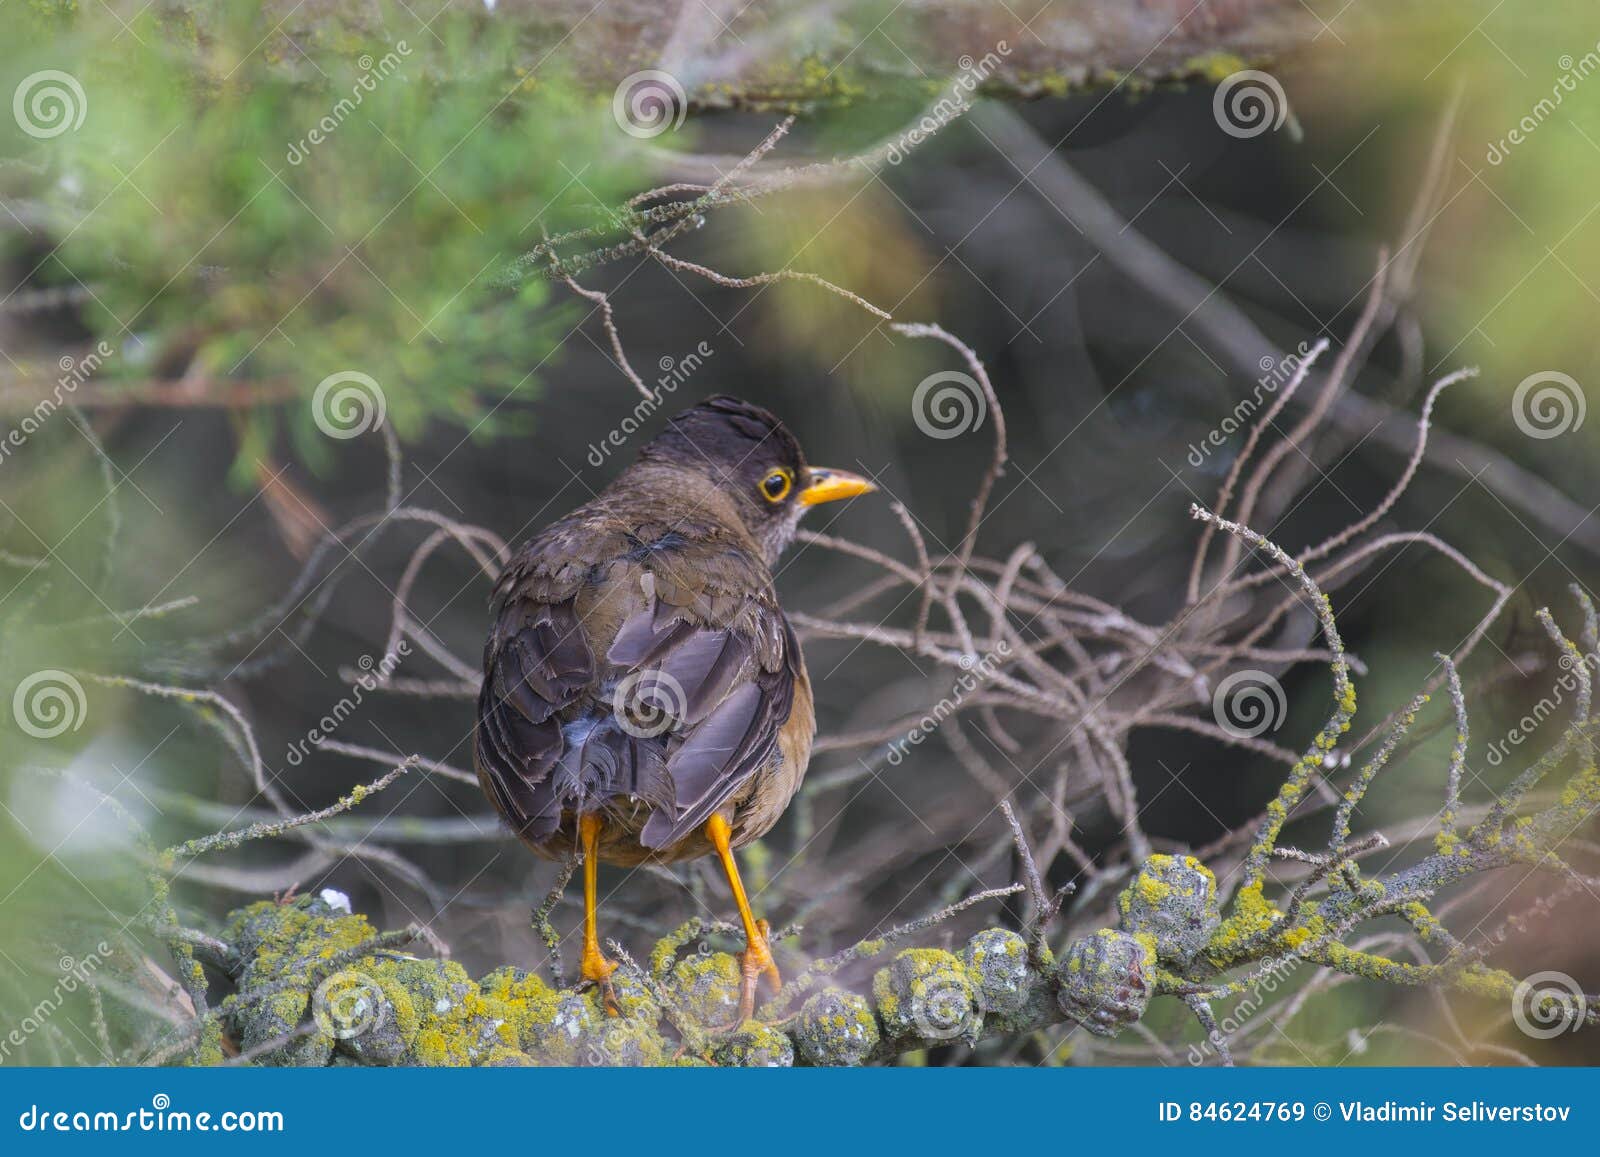 trush bird in falklands